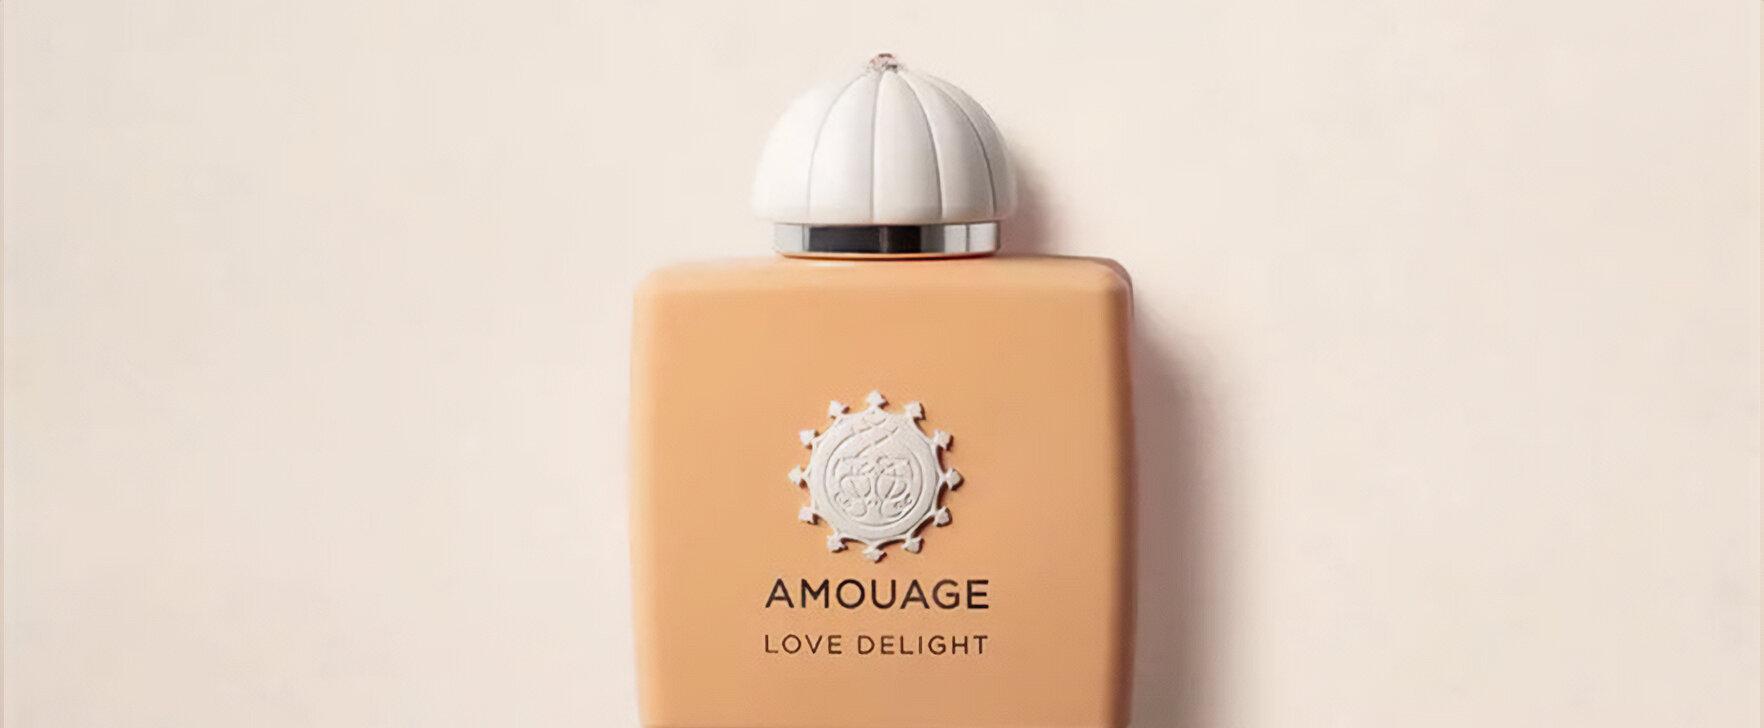 Delicate Flowers and Sweet Delicacies: The New Eau de Parfum Love Delight by Amouage